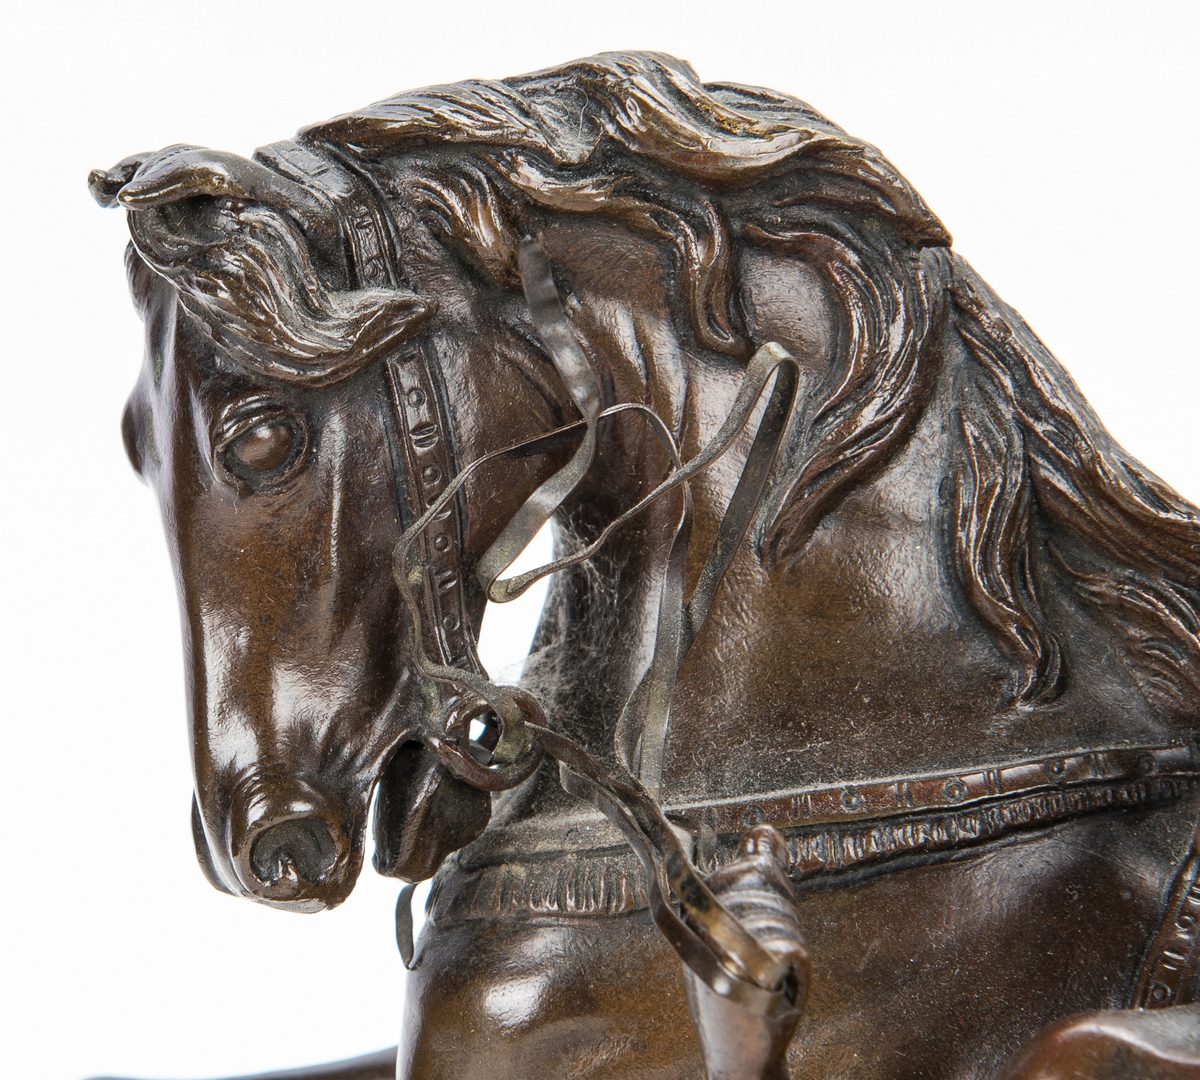 Lot 315: Pr. Bronze Figural Horse Bookends